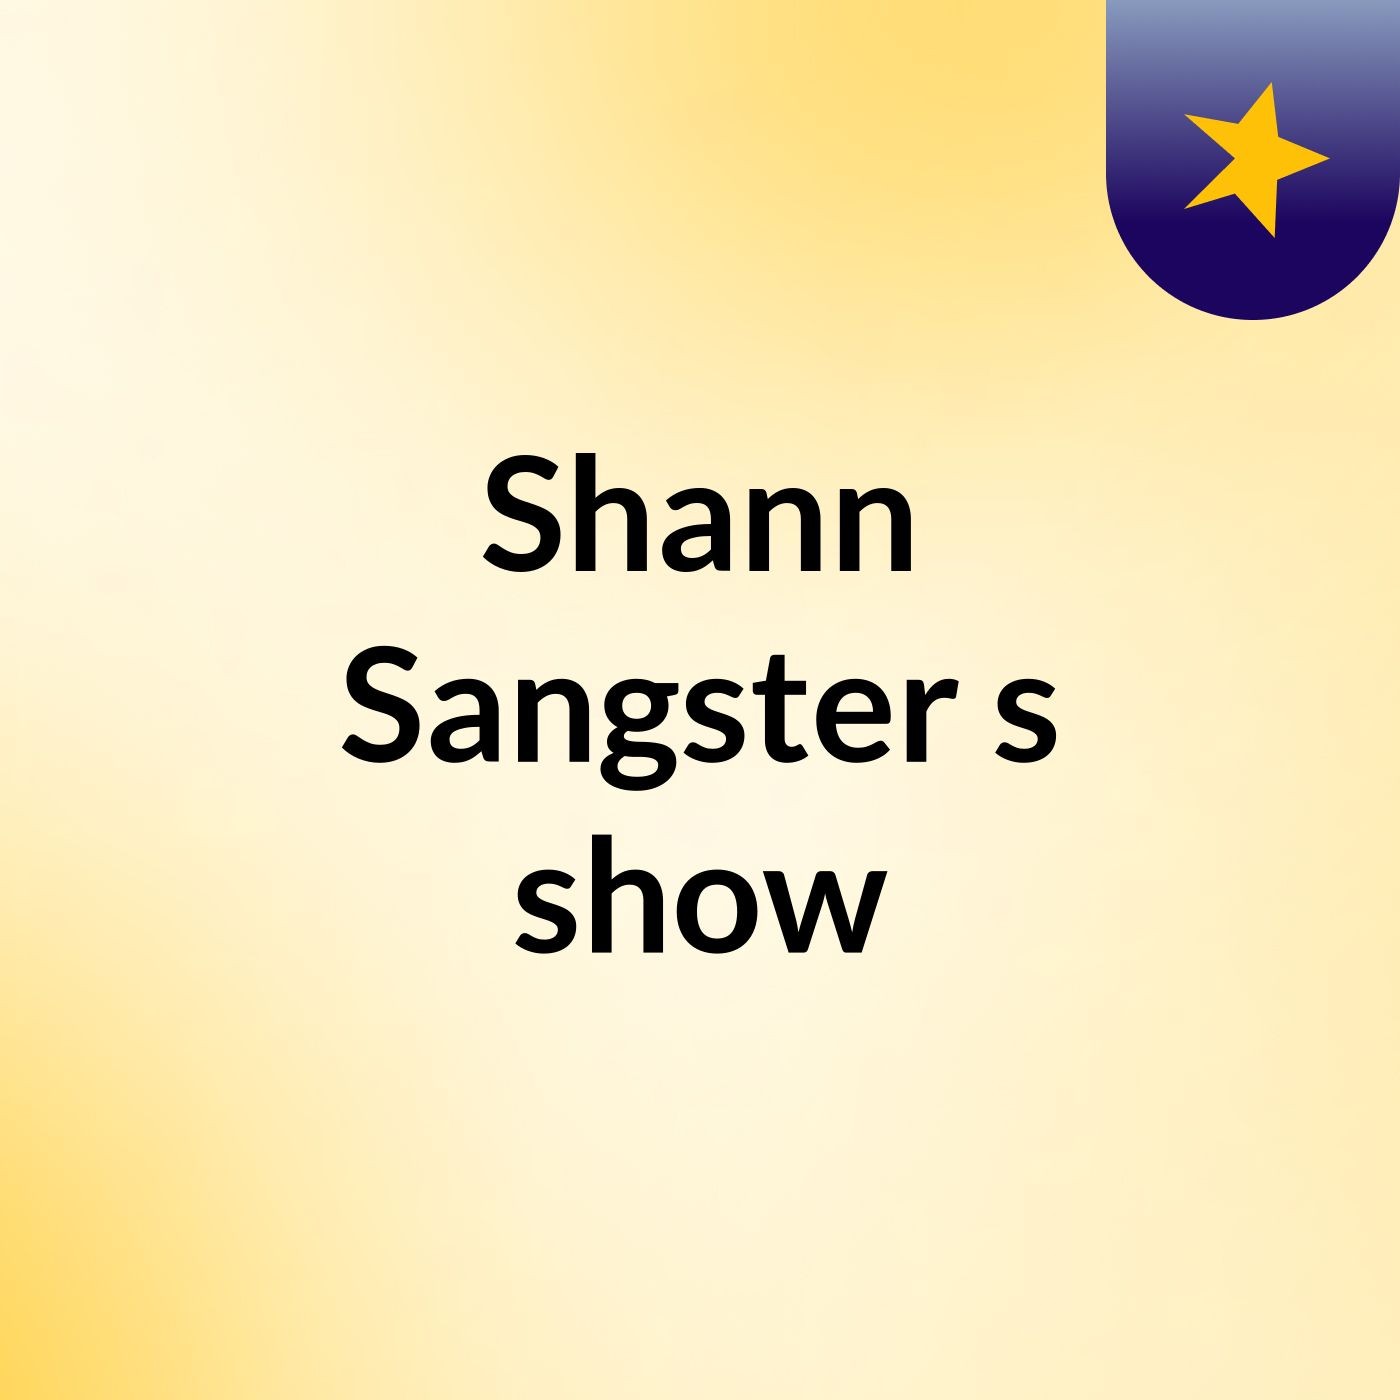 Shann Sangster's show